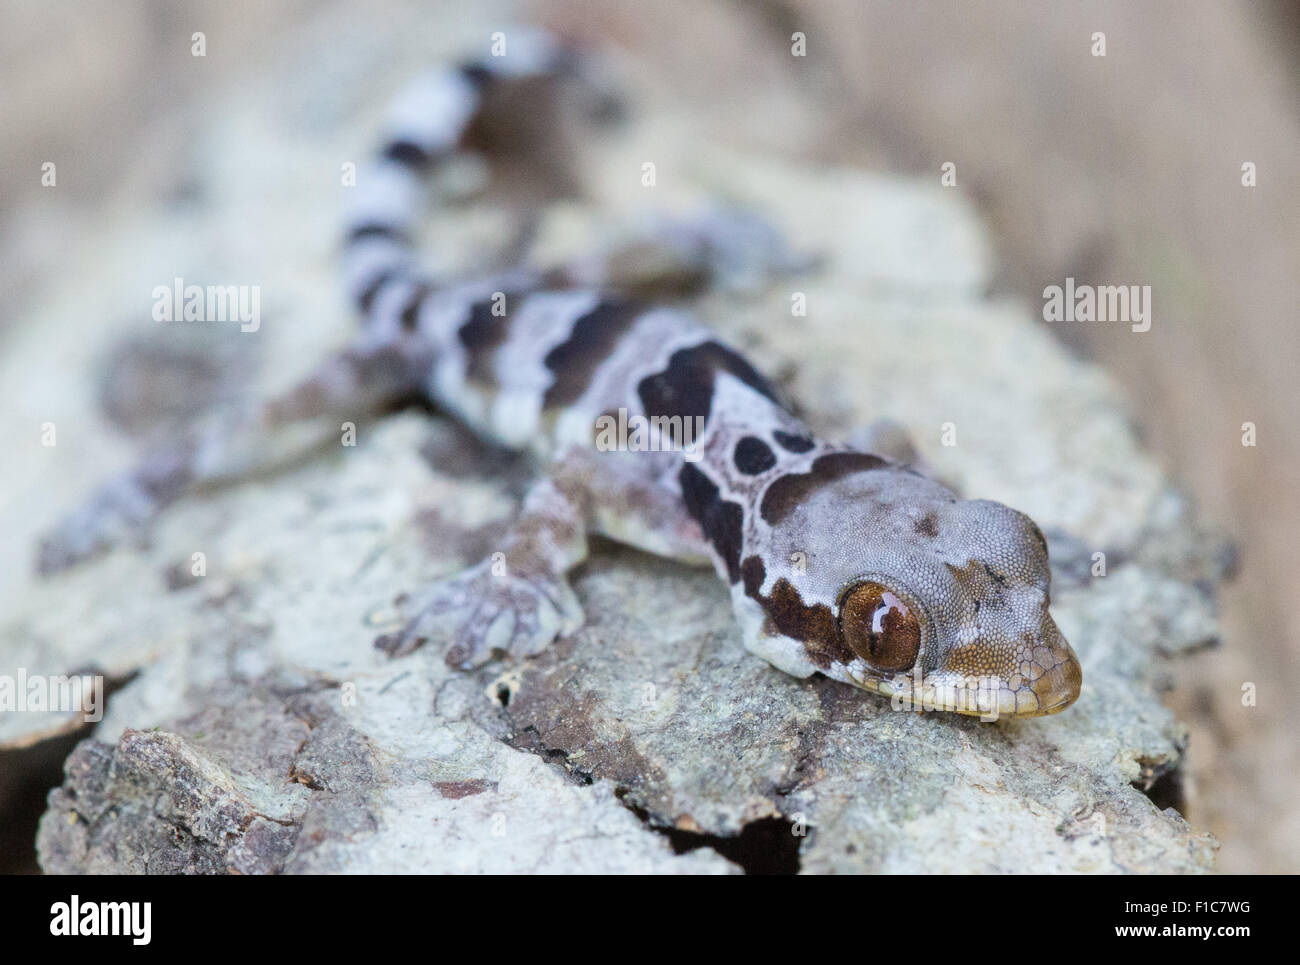 Juvenile Horsfield's Flying Gecko ( Ptychozoon horsfieldii), Taman Negara National Park, Malaysia Stock Photo